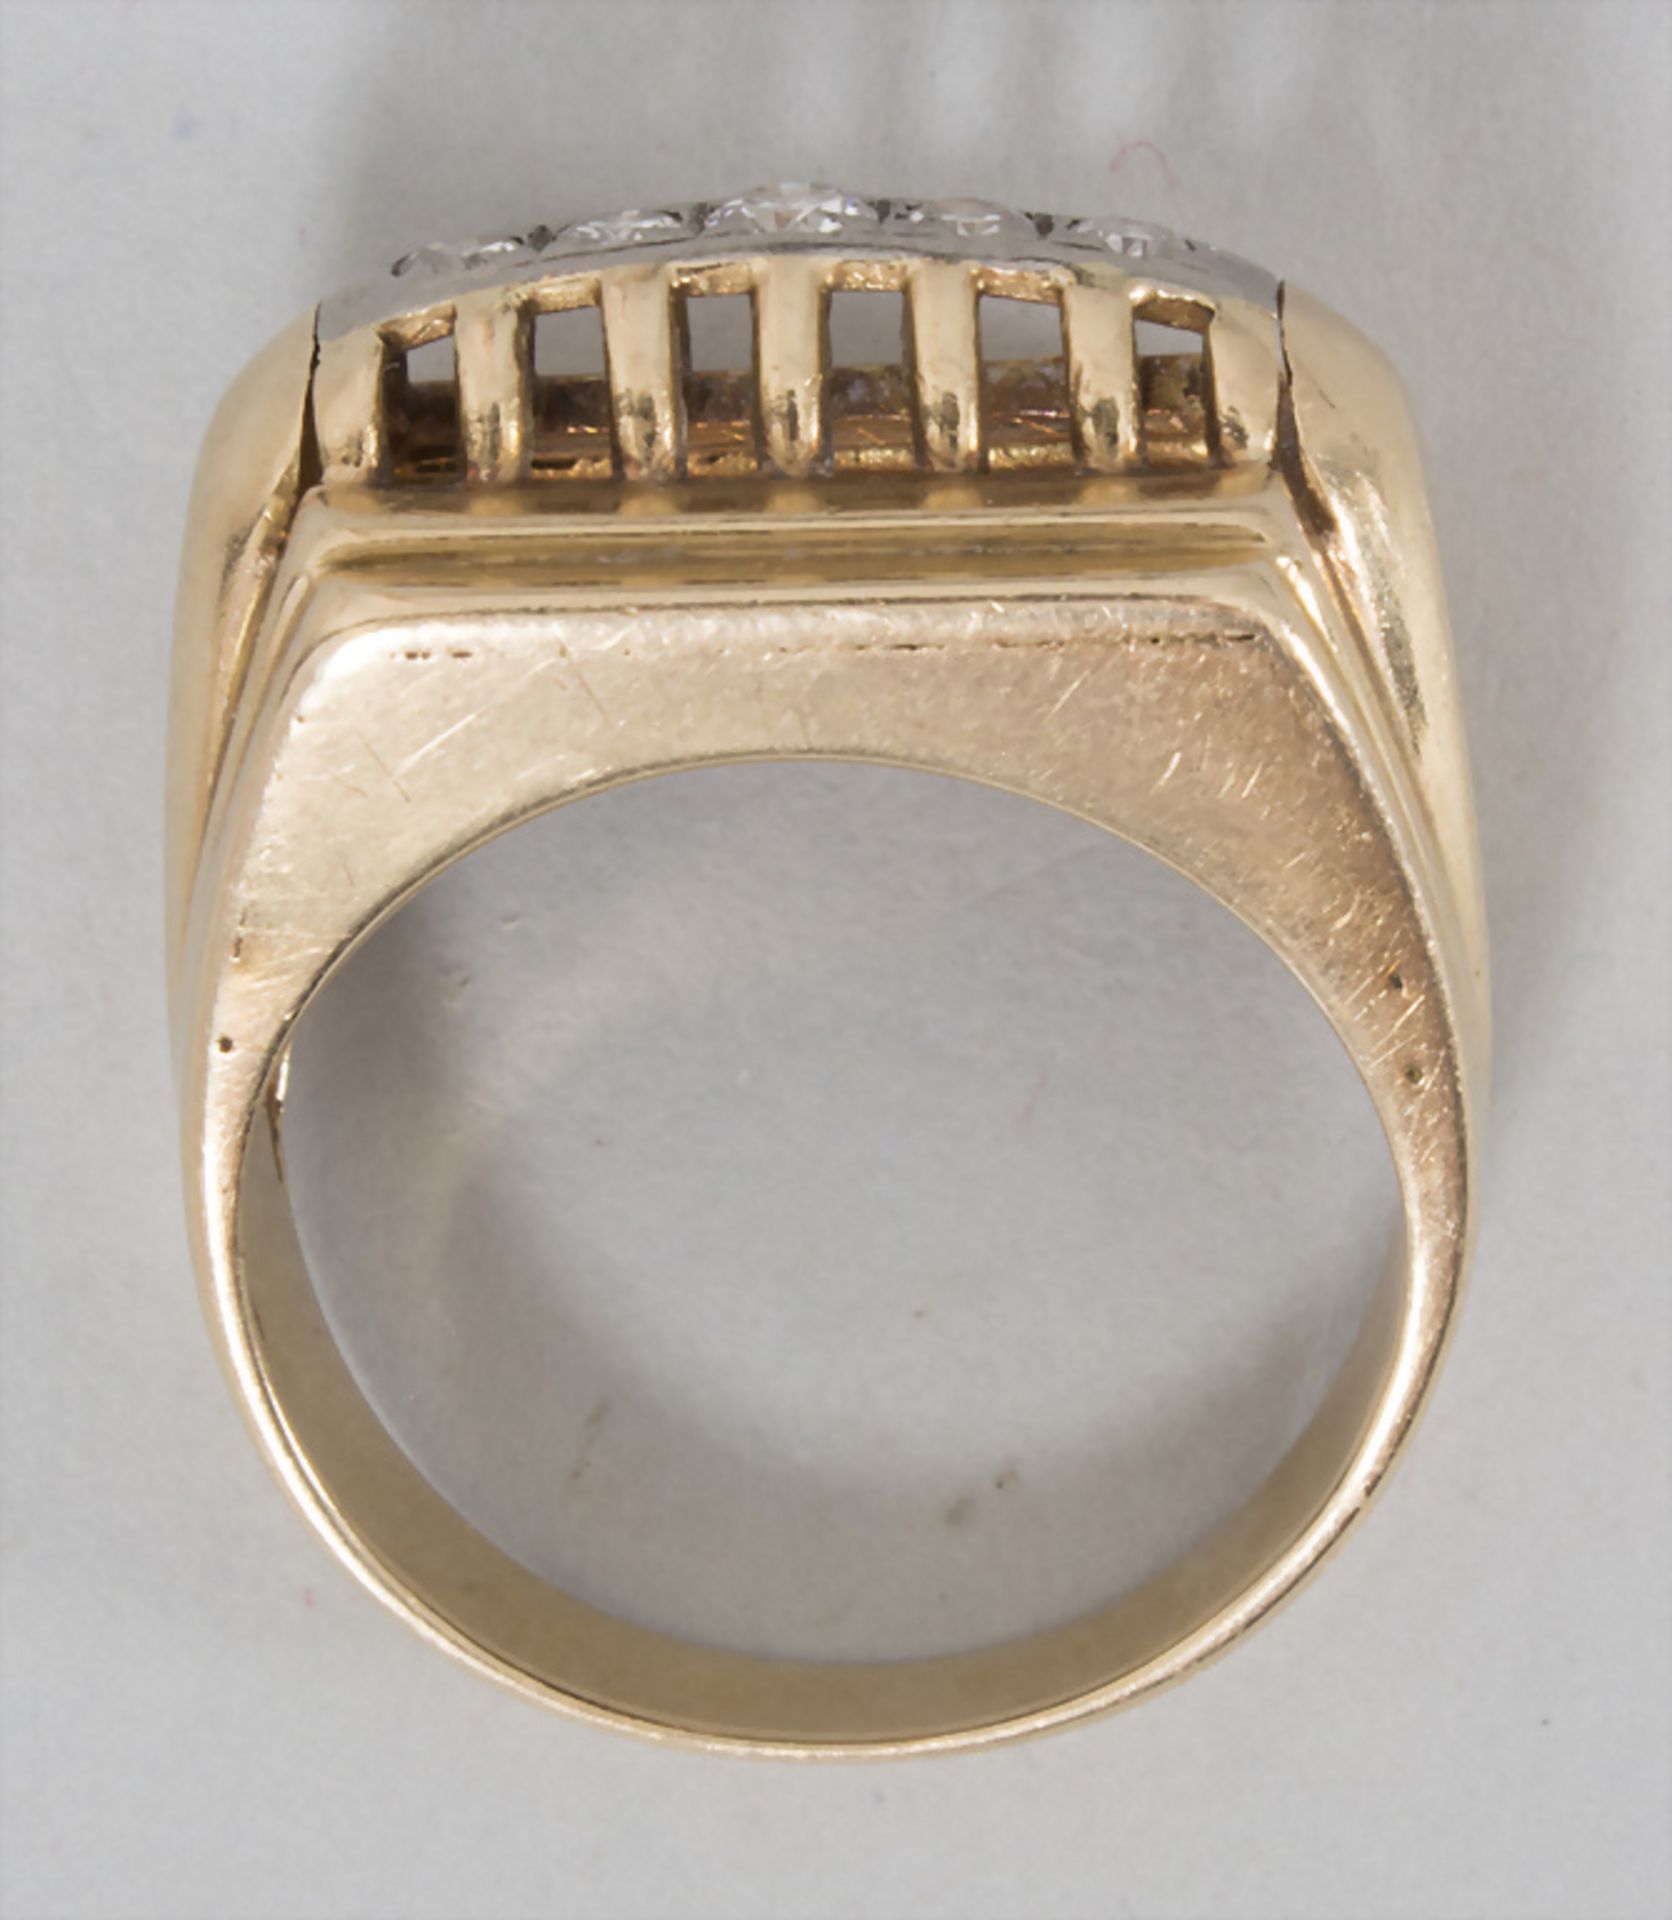 Damenring mit Diamanten / An 18 ct gold ladies ring with diamonds - Bild 3 aus 3